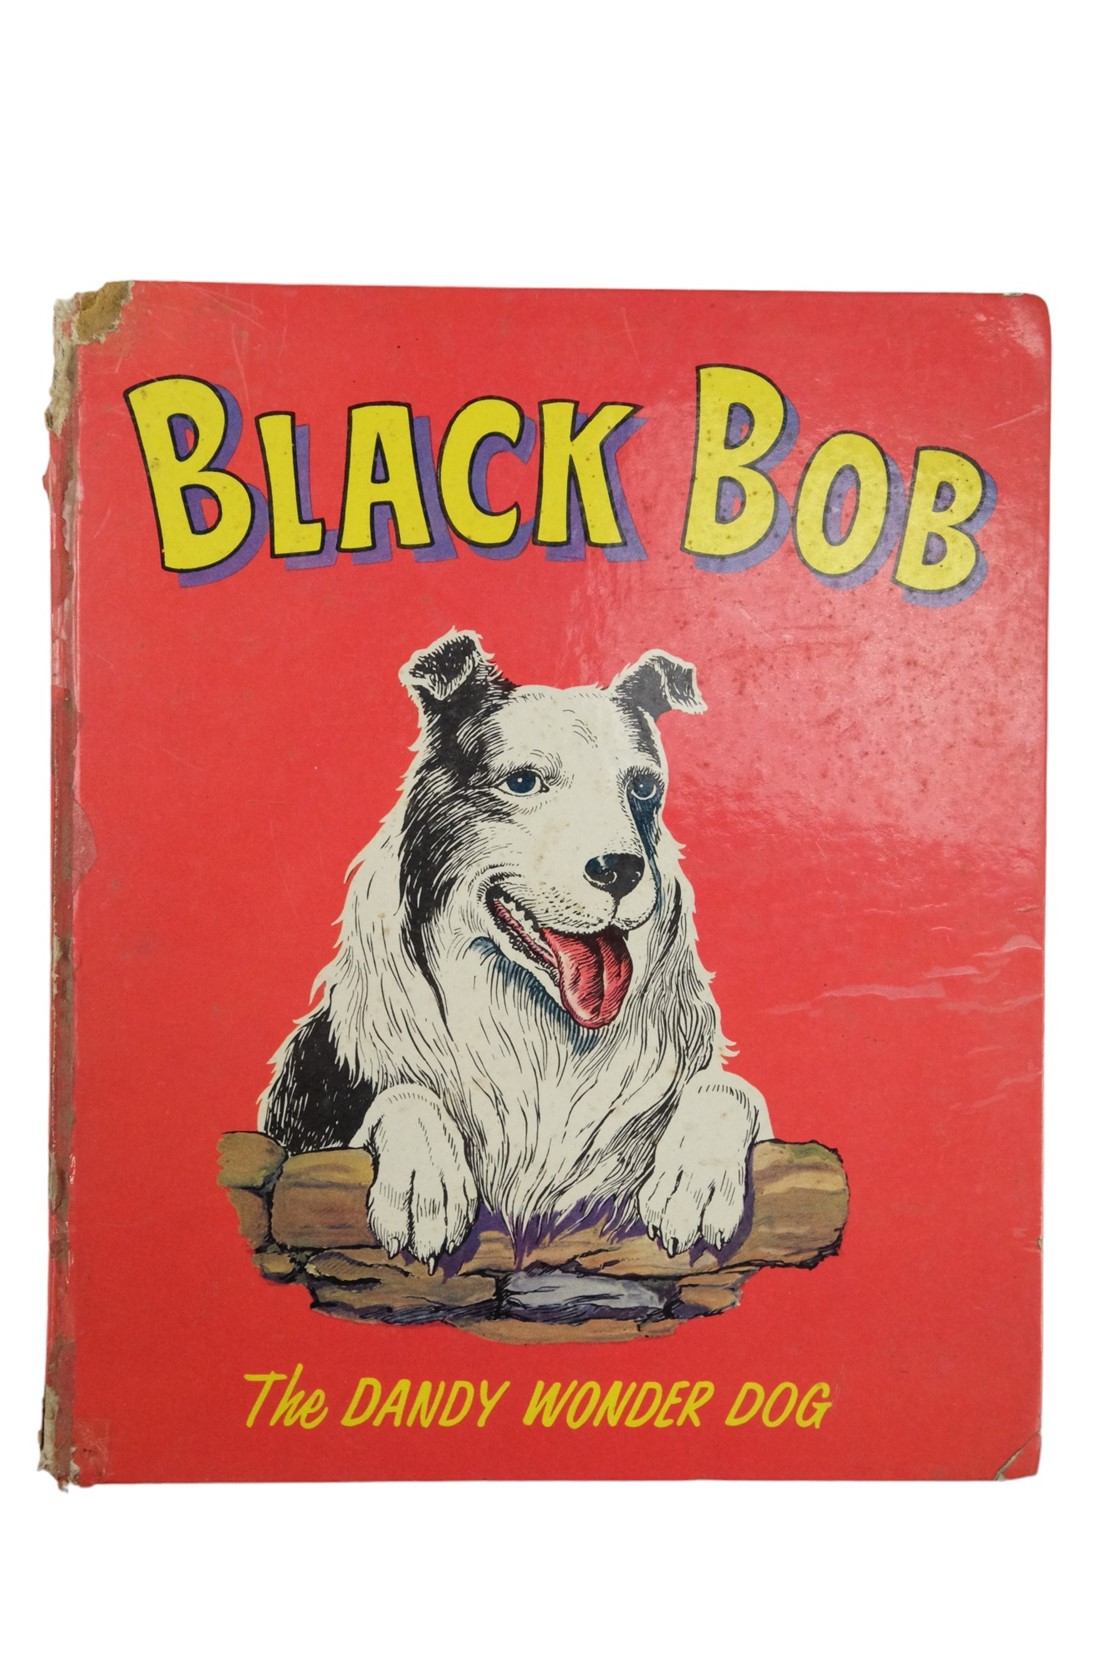 Seven vintage "Black Bob the Dandy Wonder Dog" annuals published by D C Thomson - Image 3 of 3